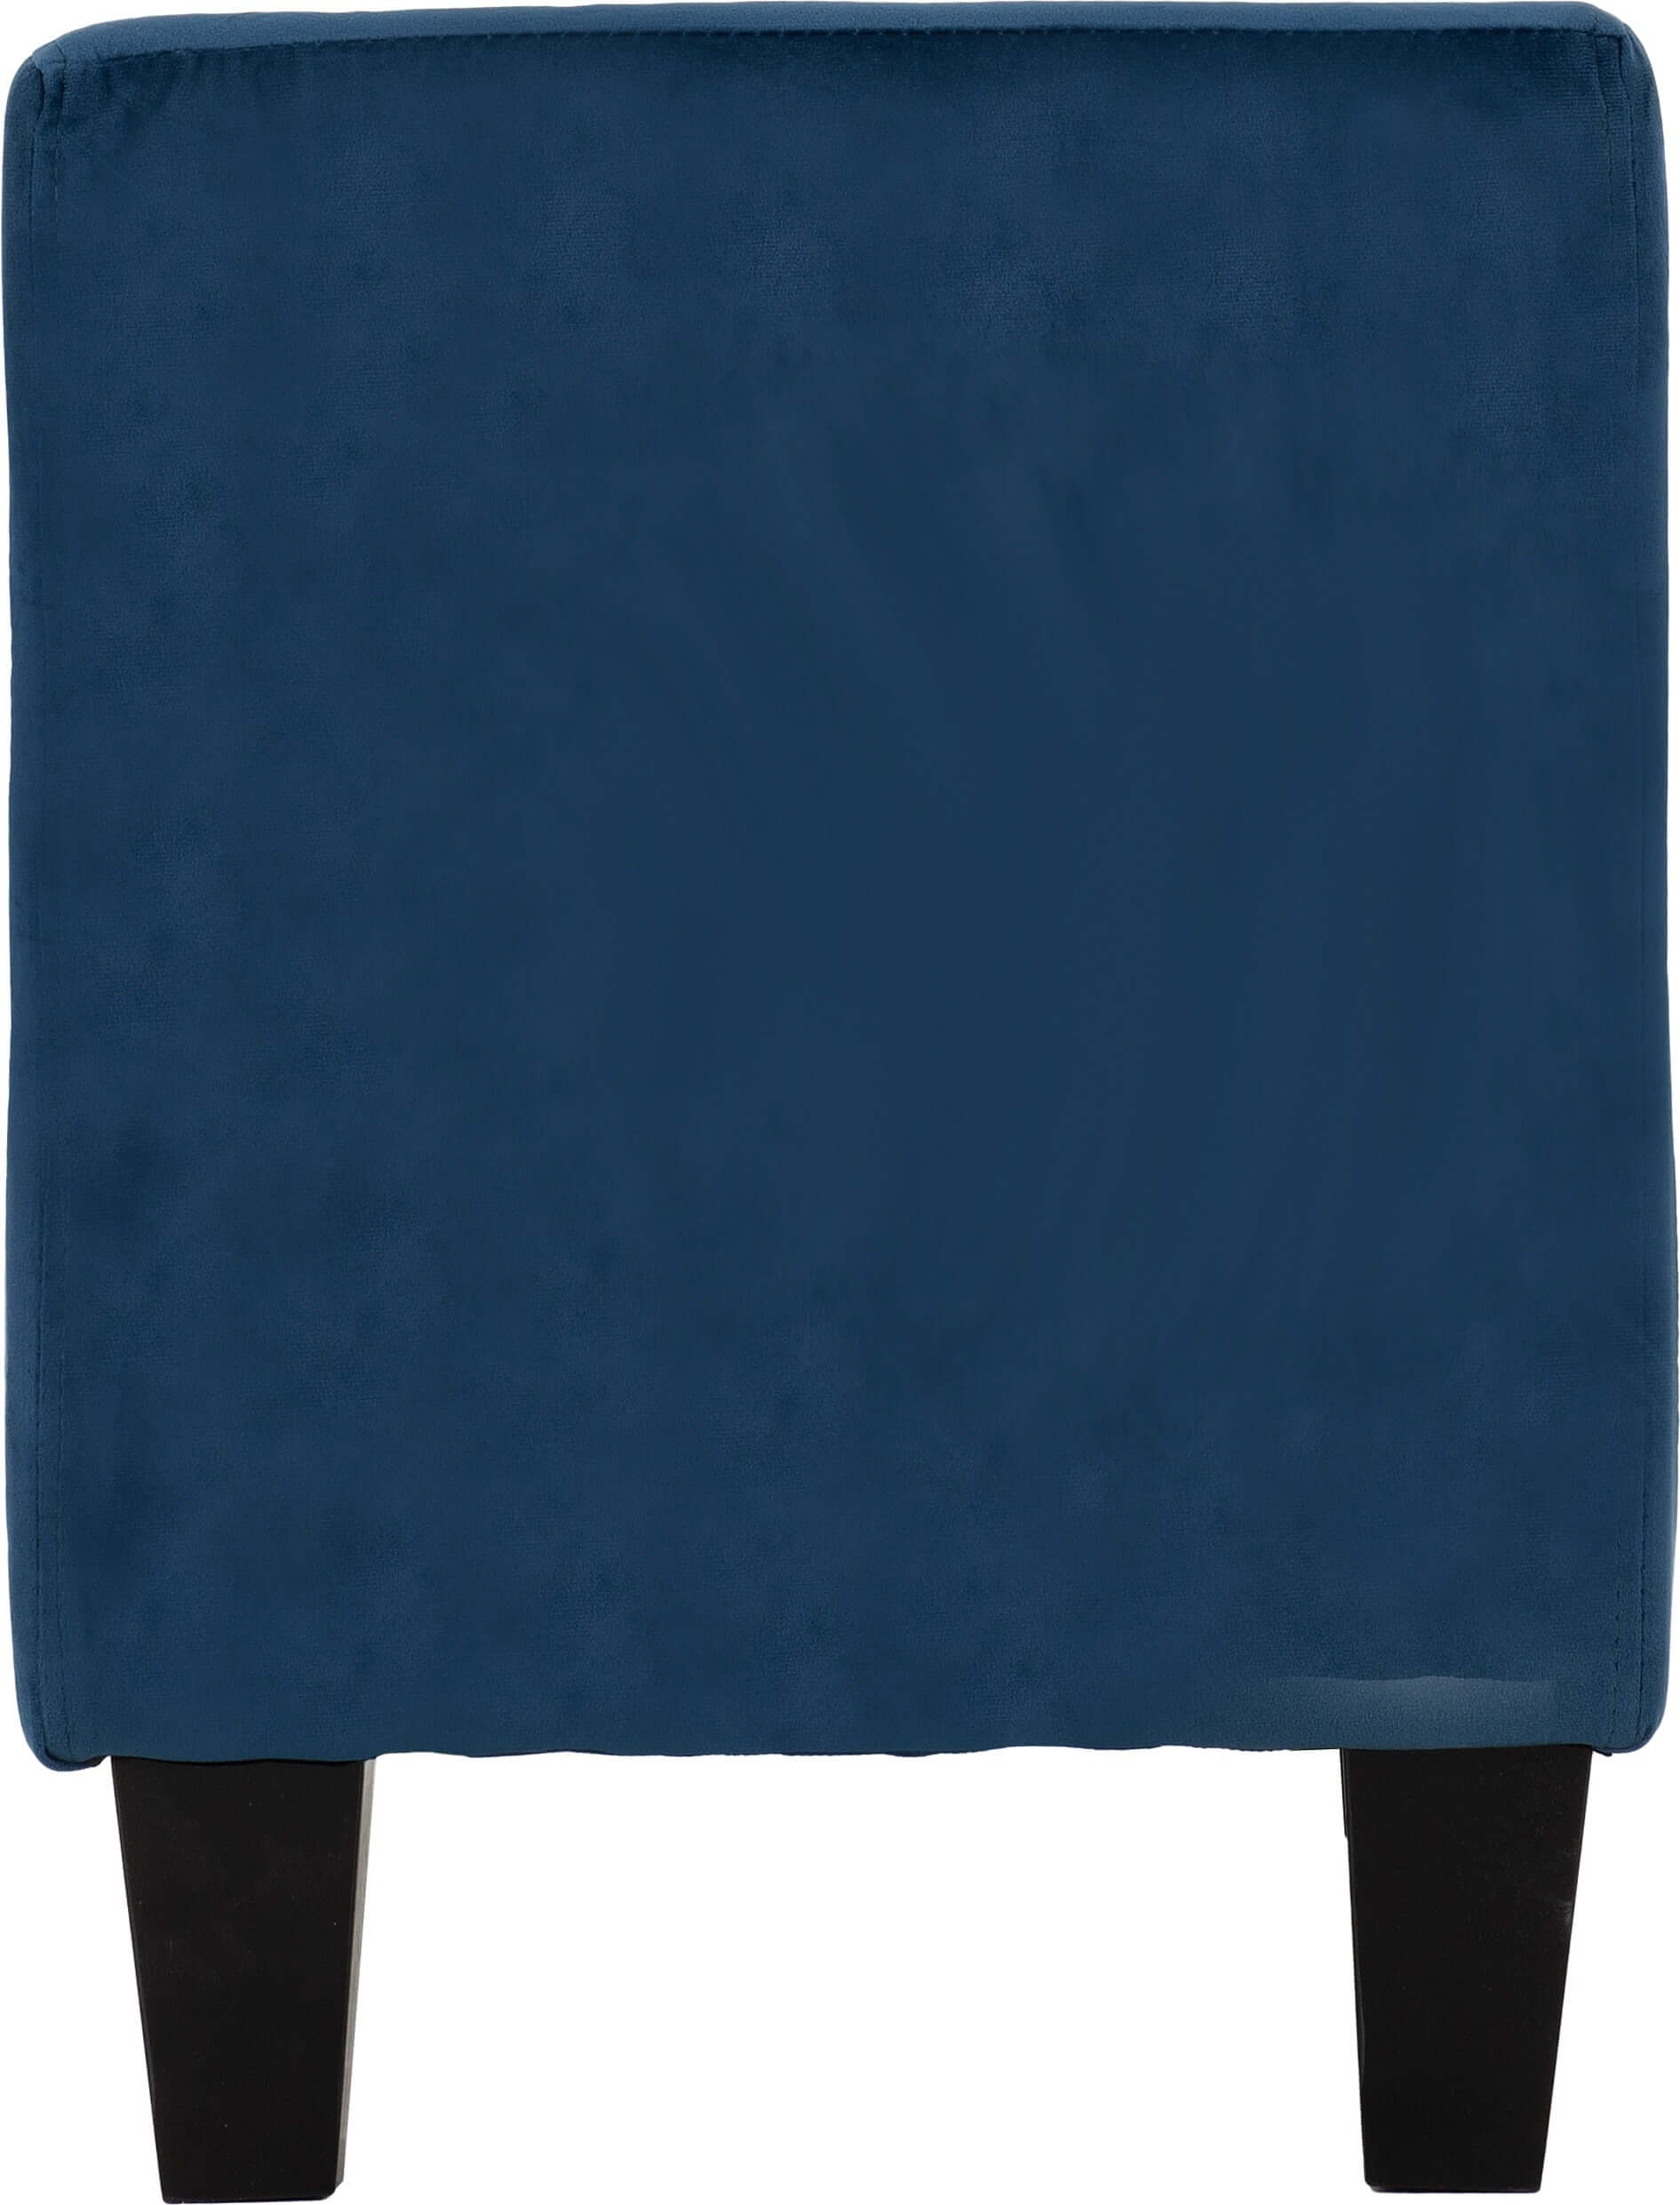 Amelia Storage Ottoman Blue Velvet Fabric- The Right Buy Store